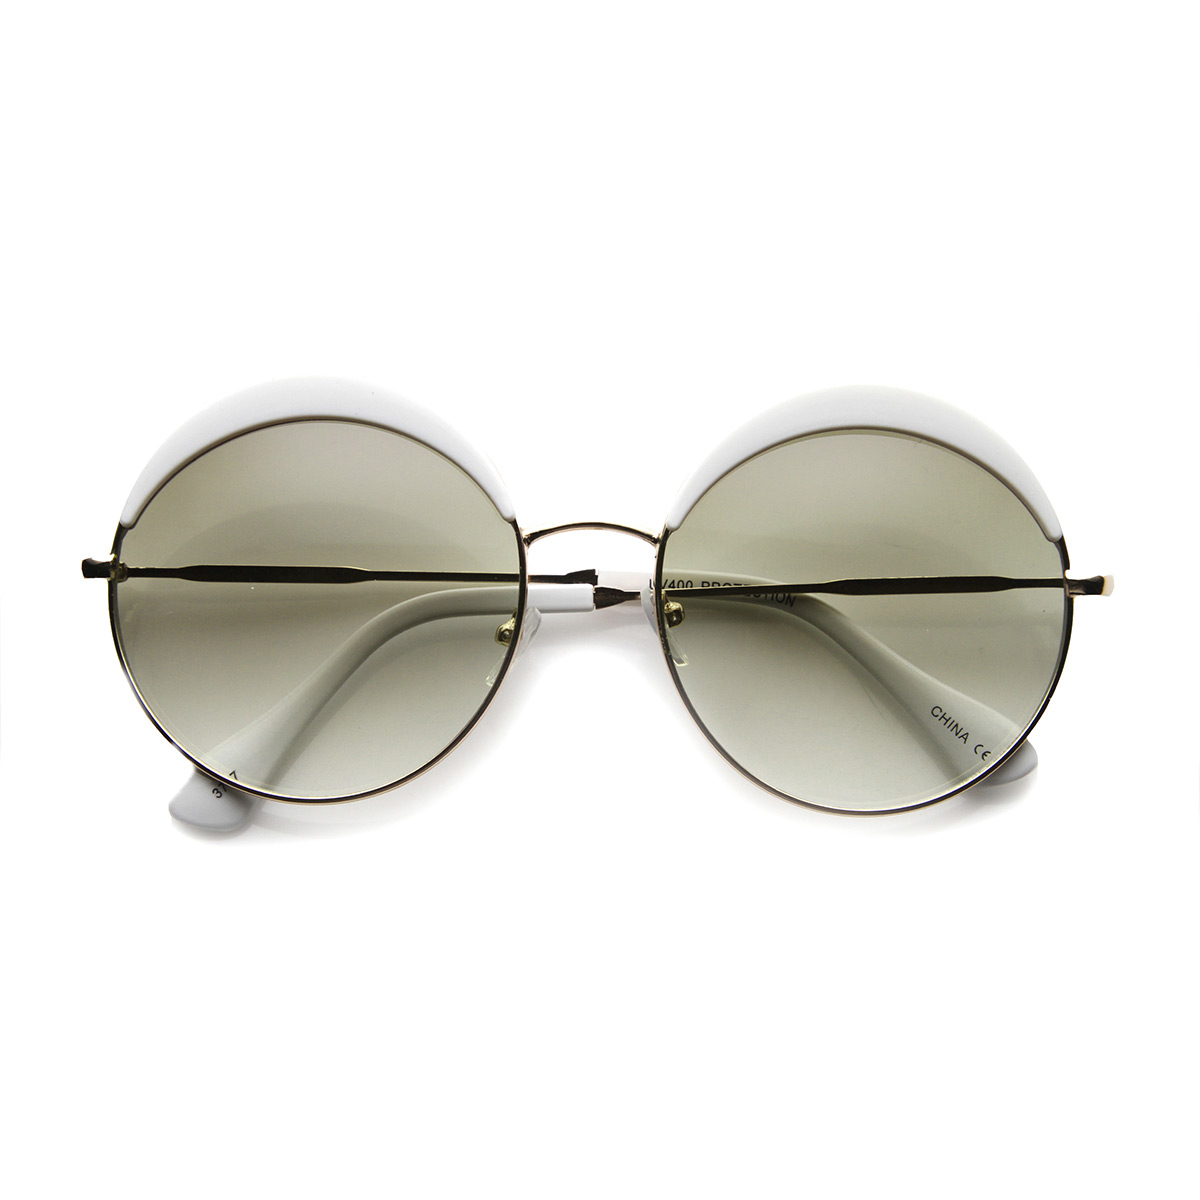 Womens Oversized Full Metal Frame Eyelid Half Brow Super Round Sunglasses 9789 - Black-Silver / Grey-Fade